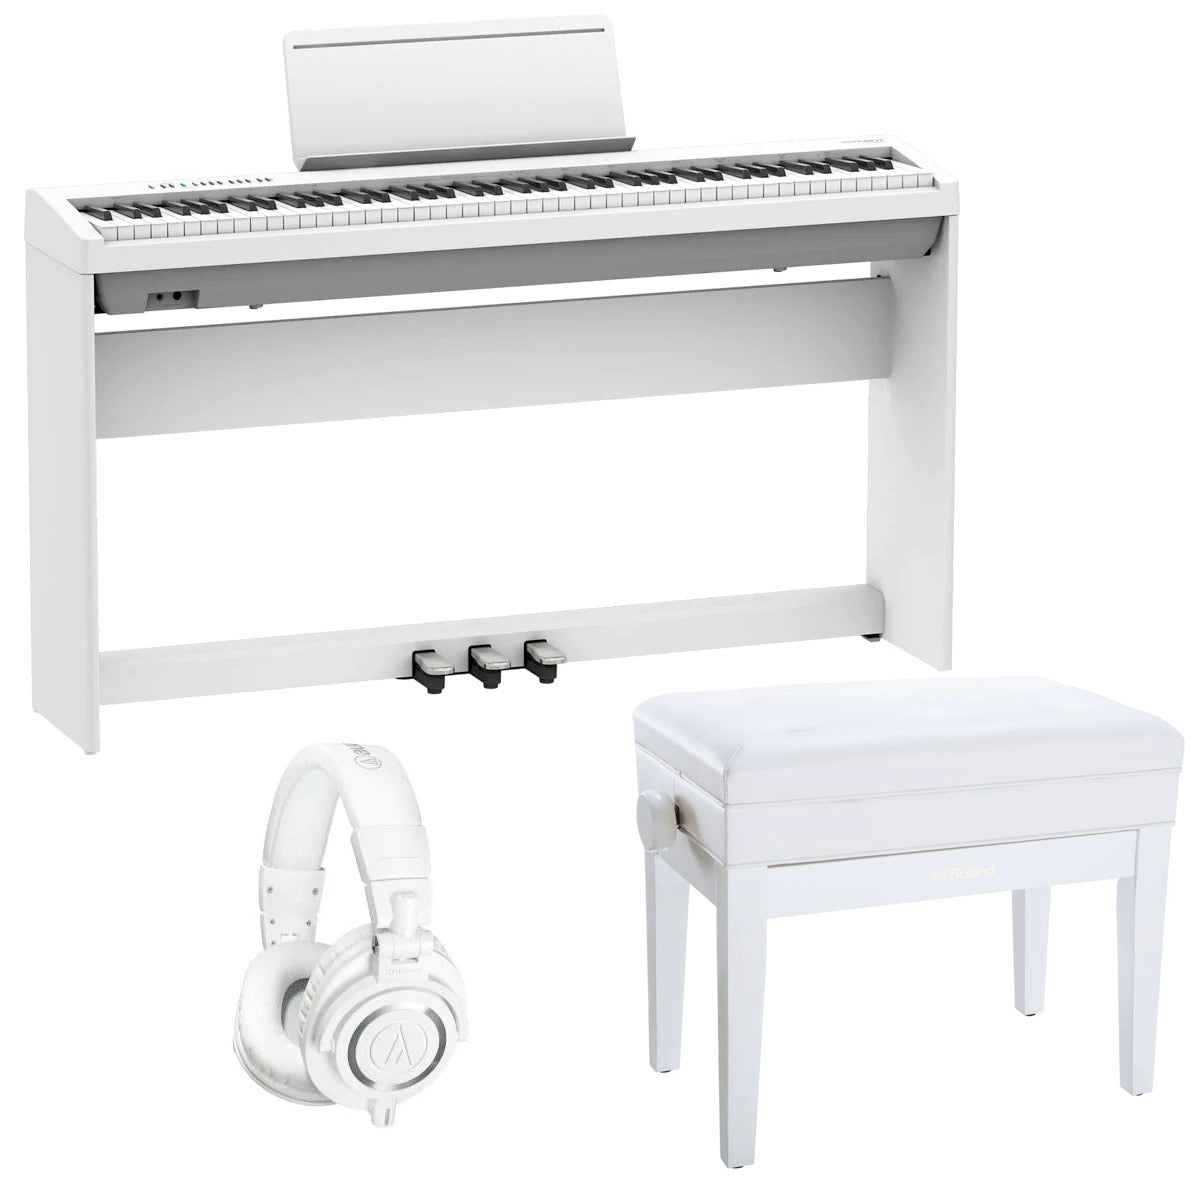 Roland FP-30X-WH 88-key Digital Piano Complete Home Bundle, White